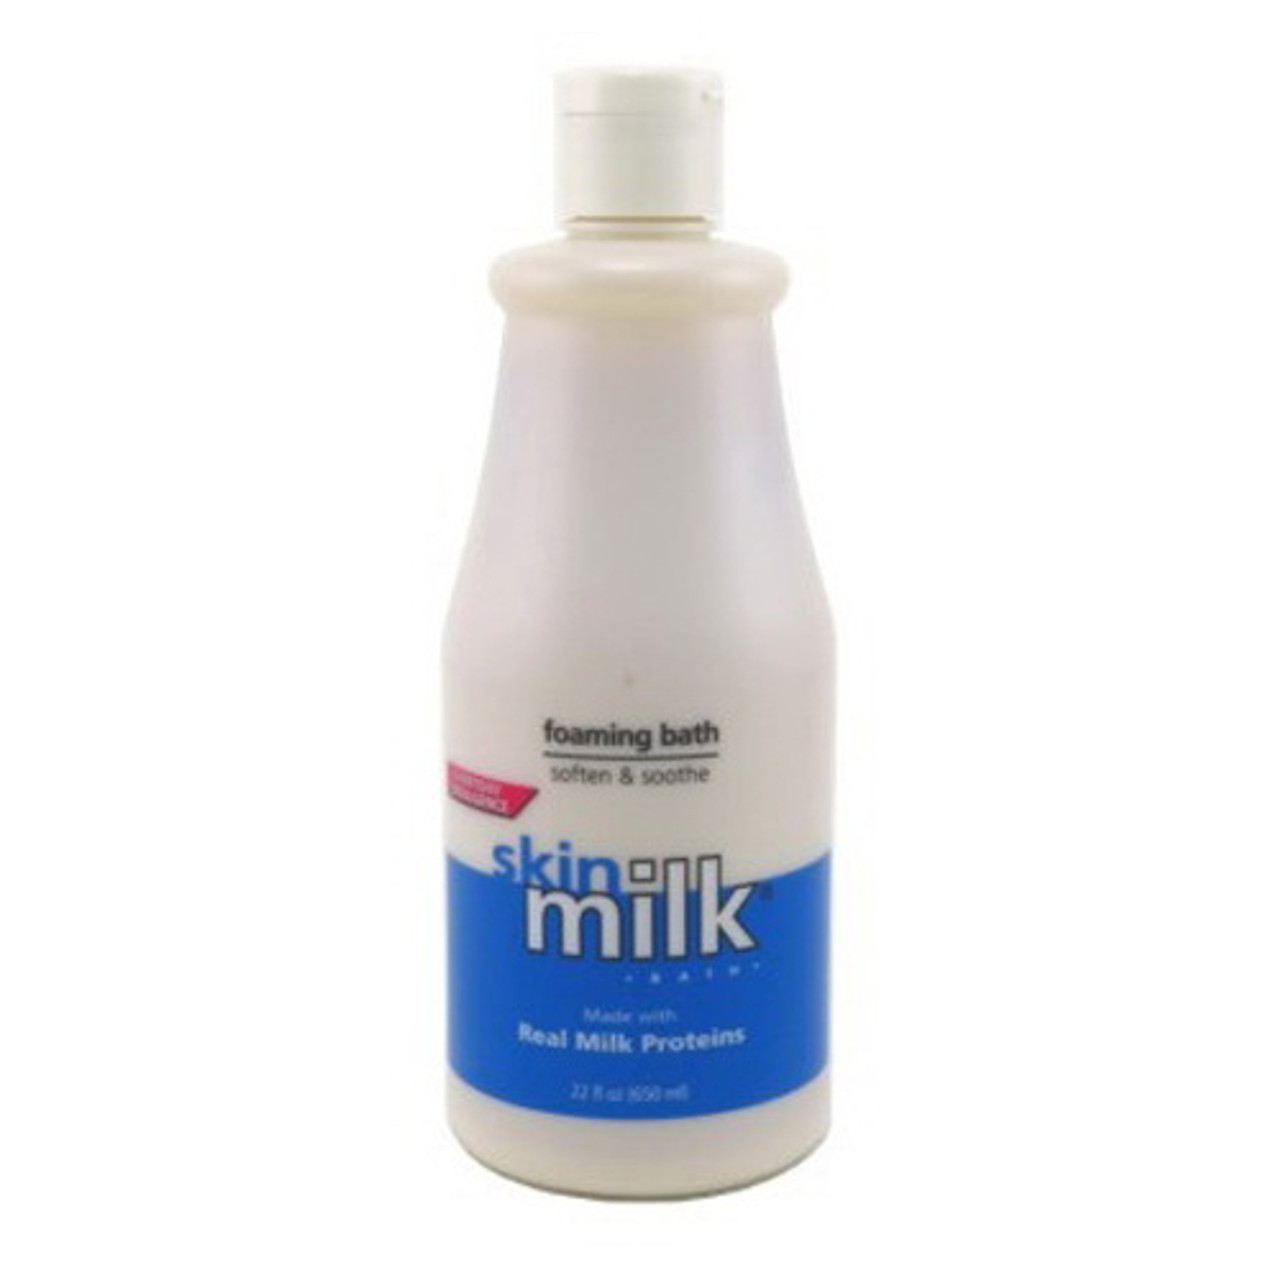 Skin Milk Foaming Bath With Real Milk Proteins 22 Oz